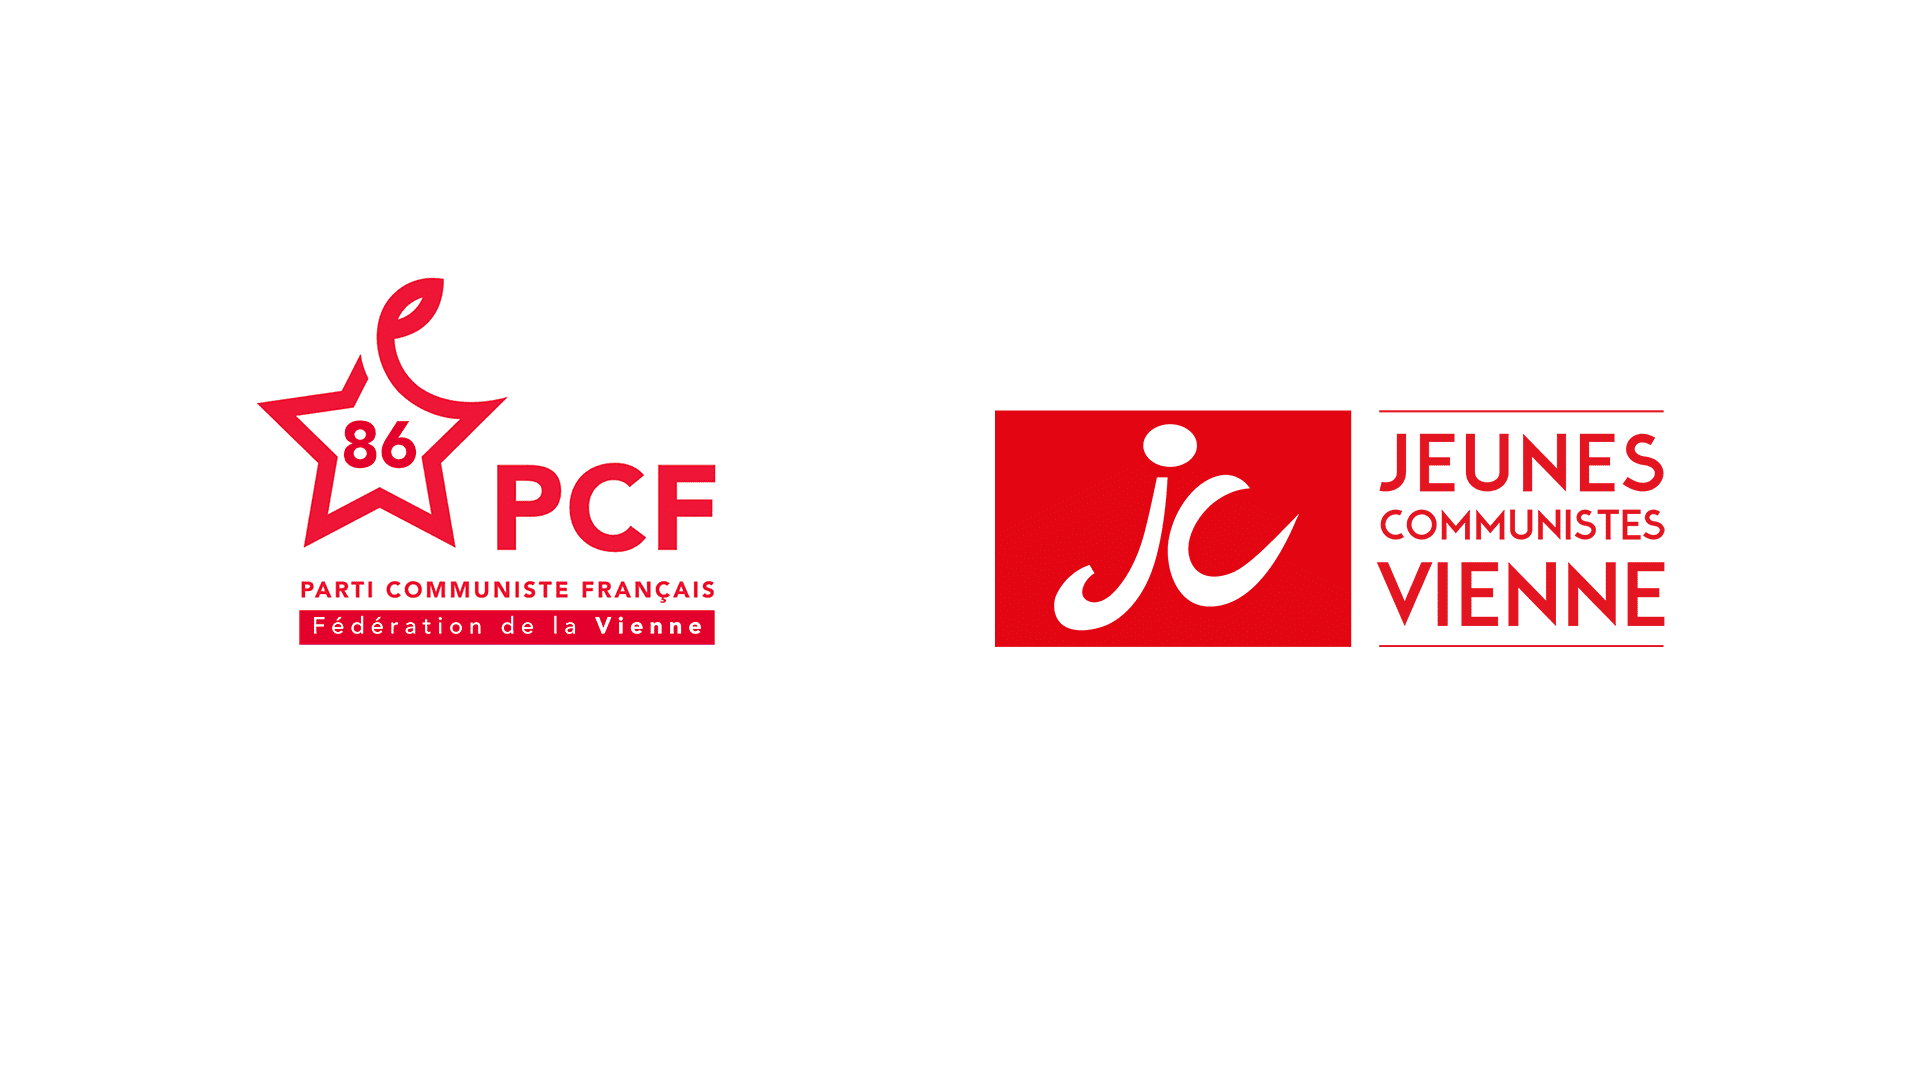 pcf jc